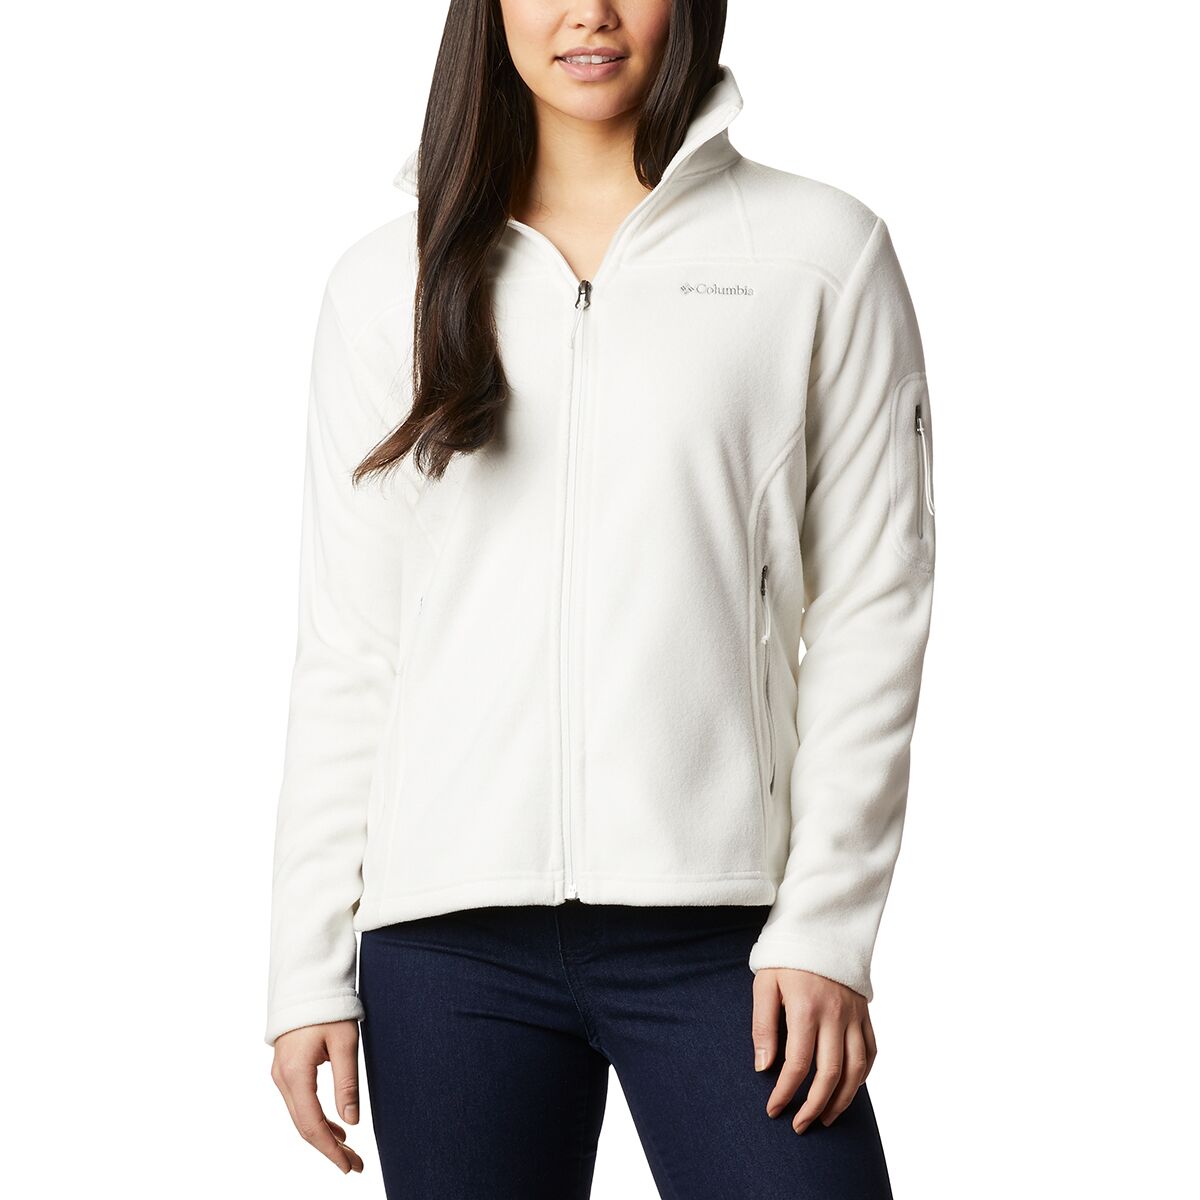 Columbia Fast Trek II Fleece Jacket - Women's - Clothing